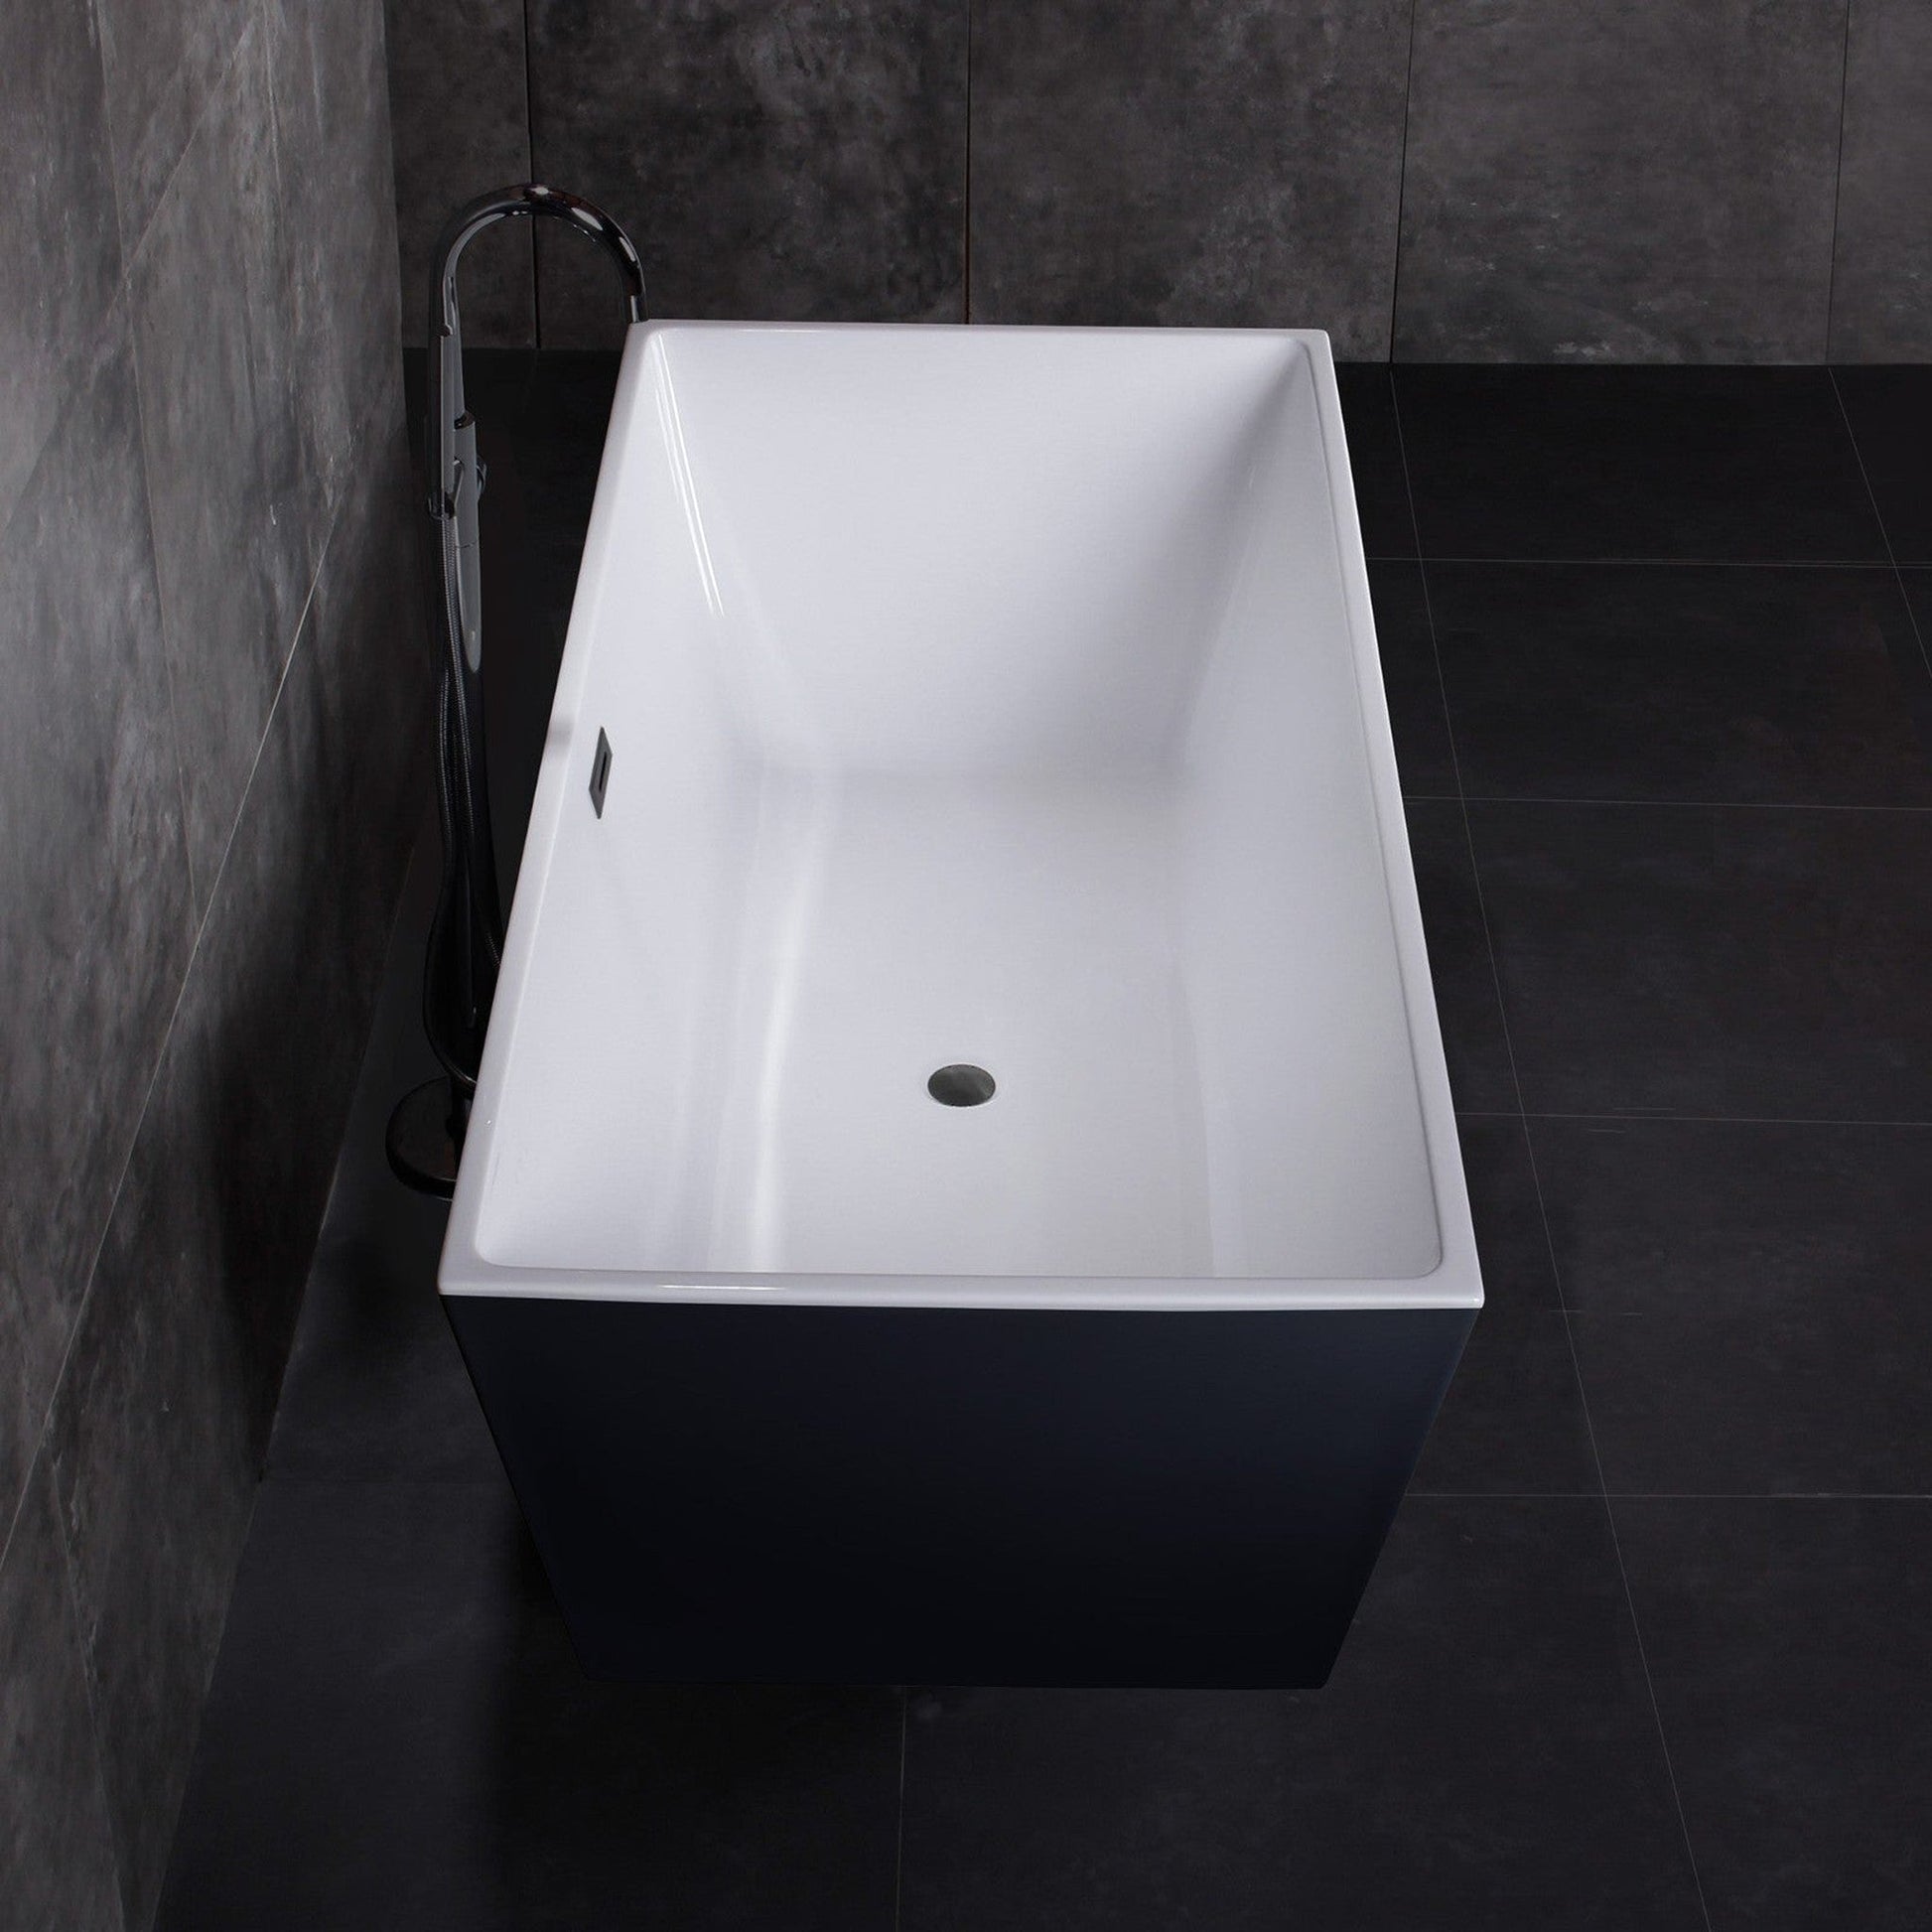 WoodBridge BTA1812 67" Black Acrylic Freestanding Soaking Bathtub With Matte Black Drain, Overflow, F0072MBVT Tub Filler and Caddy Tray